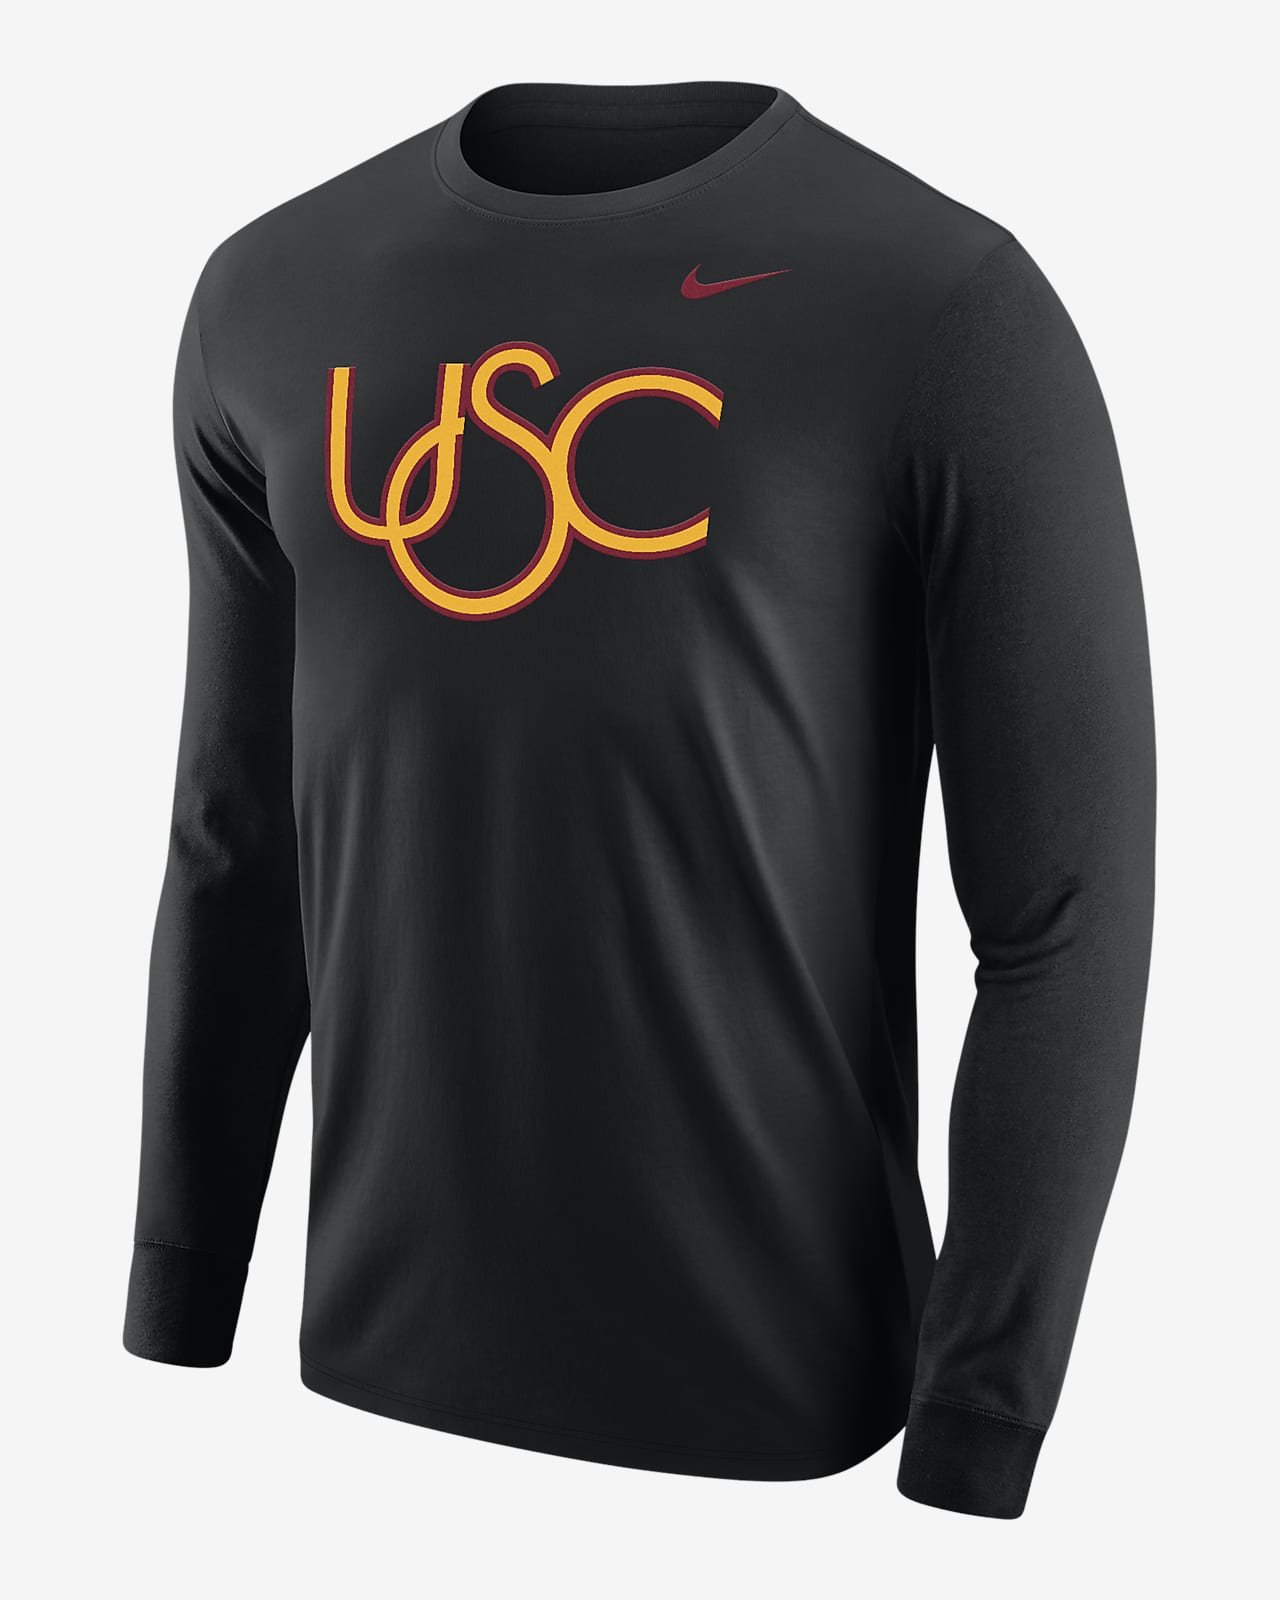 USC Men's Nike College Long-Sleeve T-Shirt